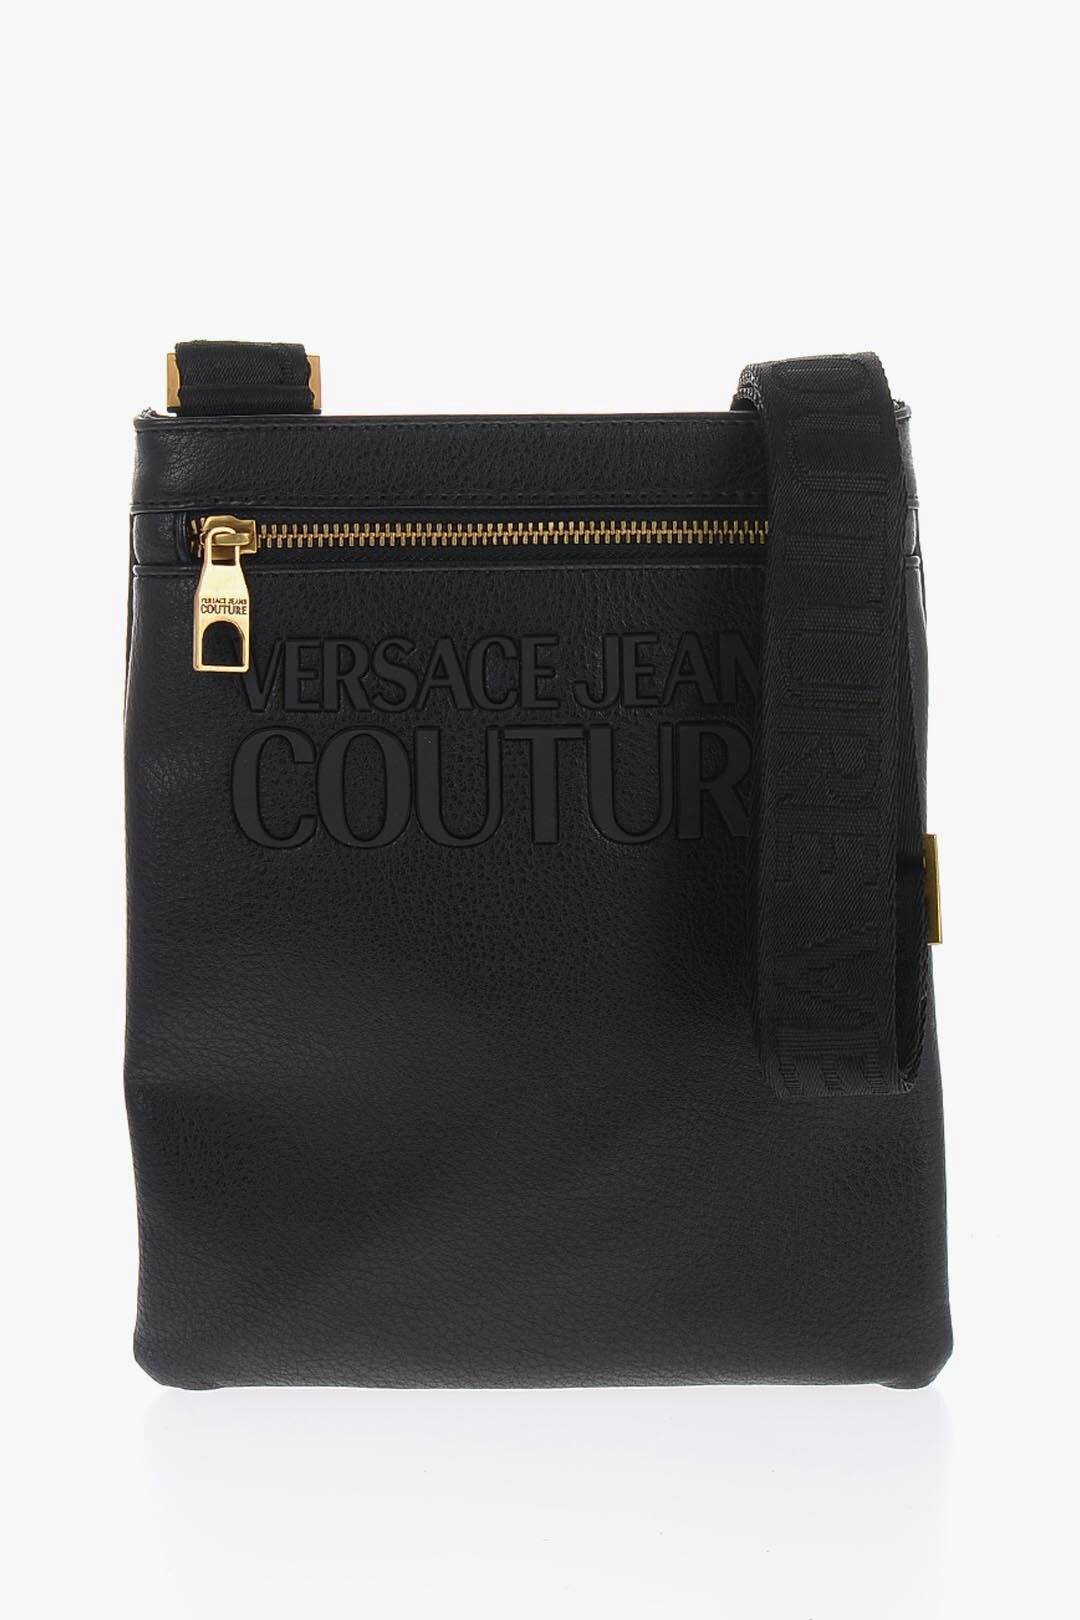 Versace Jeans Couture Logo Wallet for Men | Online Store EU